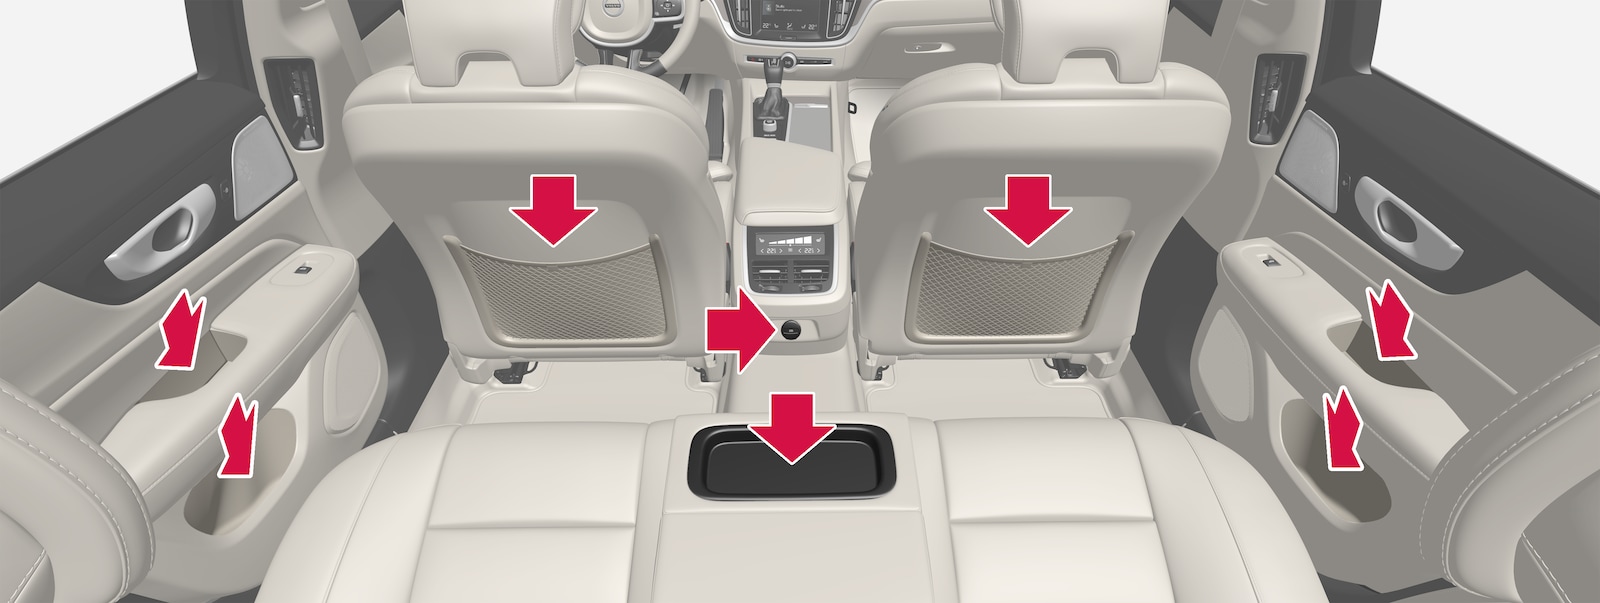 P5-2017-S/V60-Interior storage, back seat